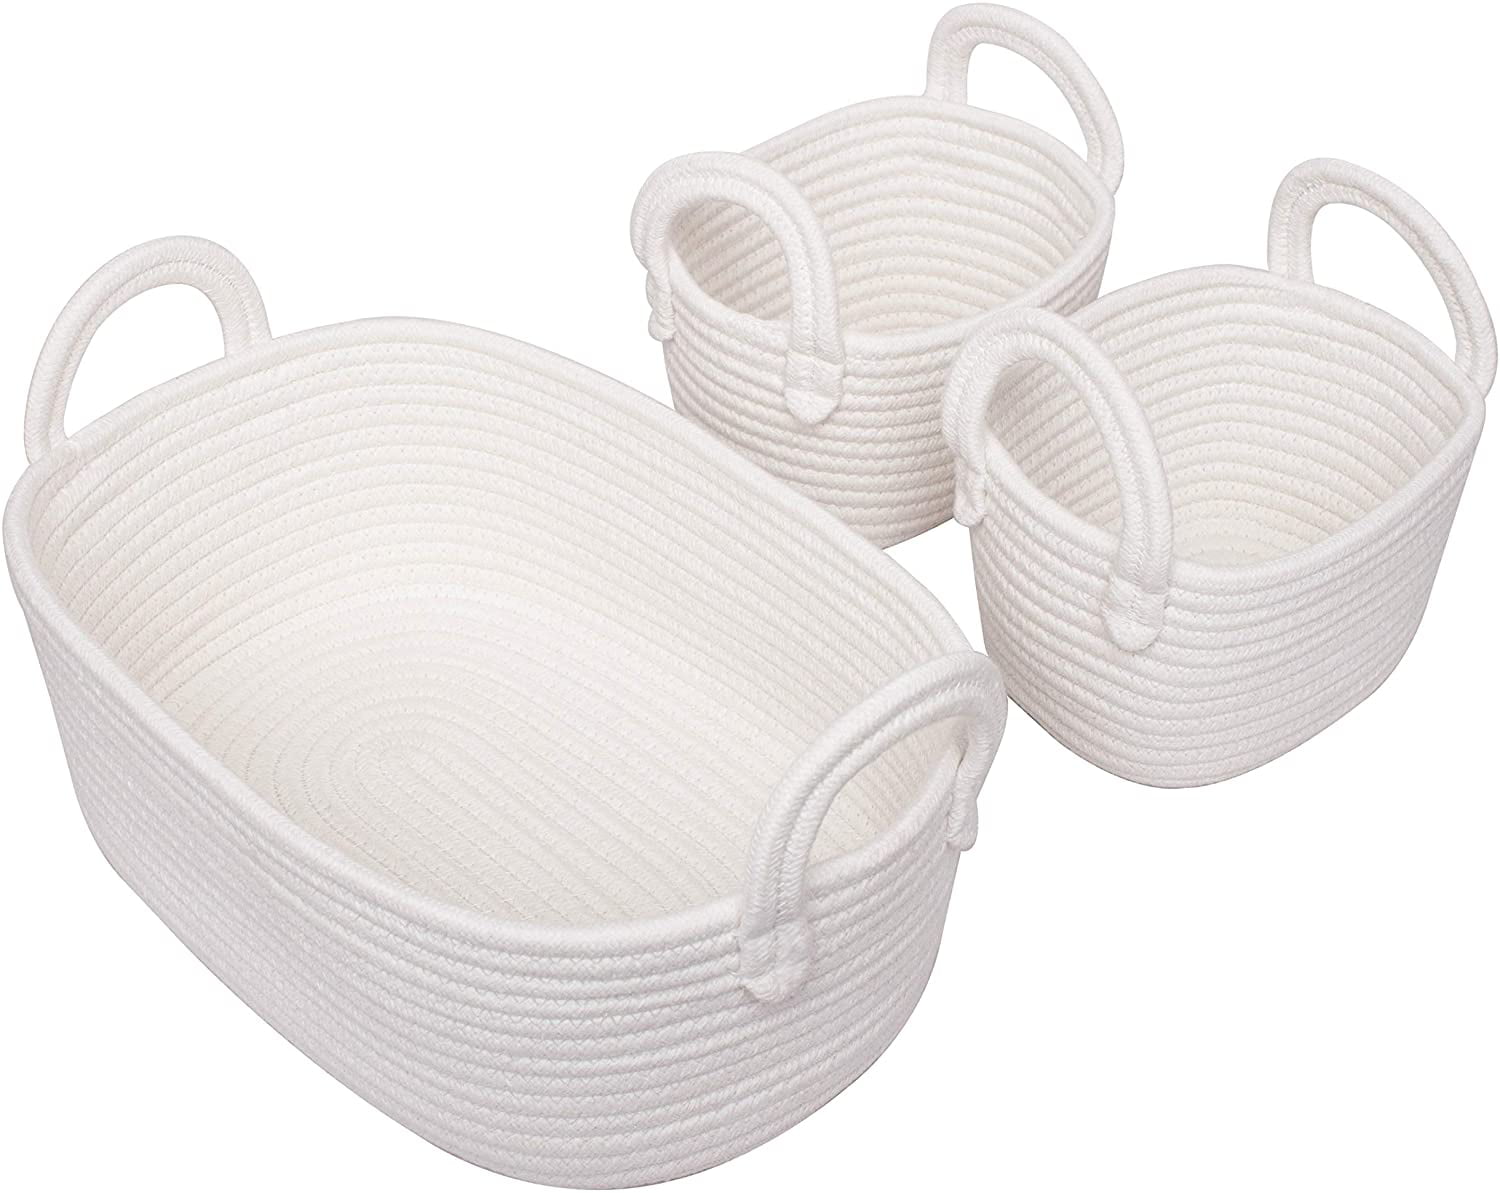 … Nursery Gift Decorative Cotton Woven Basket with Wood Handles White Nursery Baskets Organizer Bins for Baby Toys Cotton Rope Woven Storage Baskets Bin Set of 3 